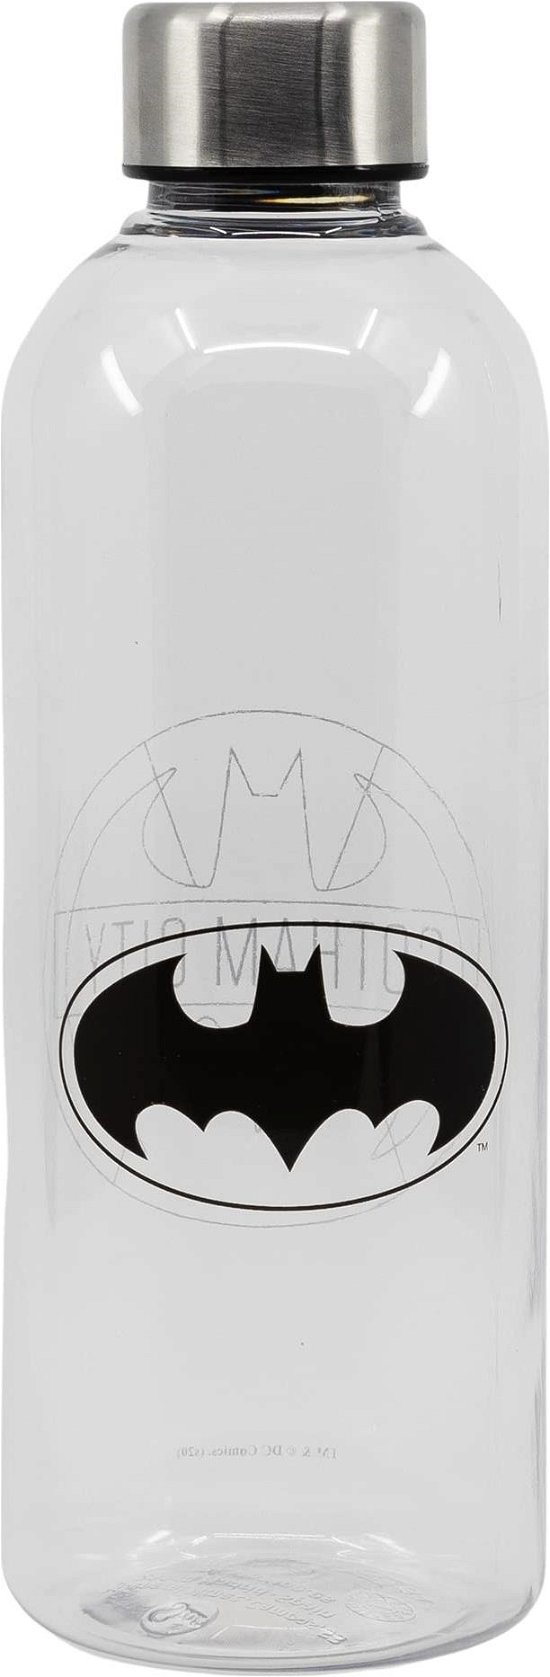 BATMAN - Plastic Bottle - Size 850ml - Batman - Merchandise -  - 8412497855650 - 